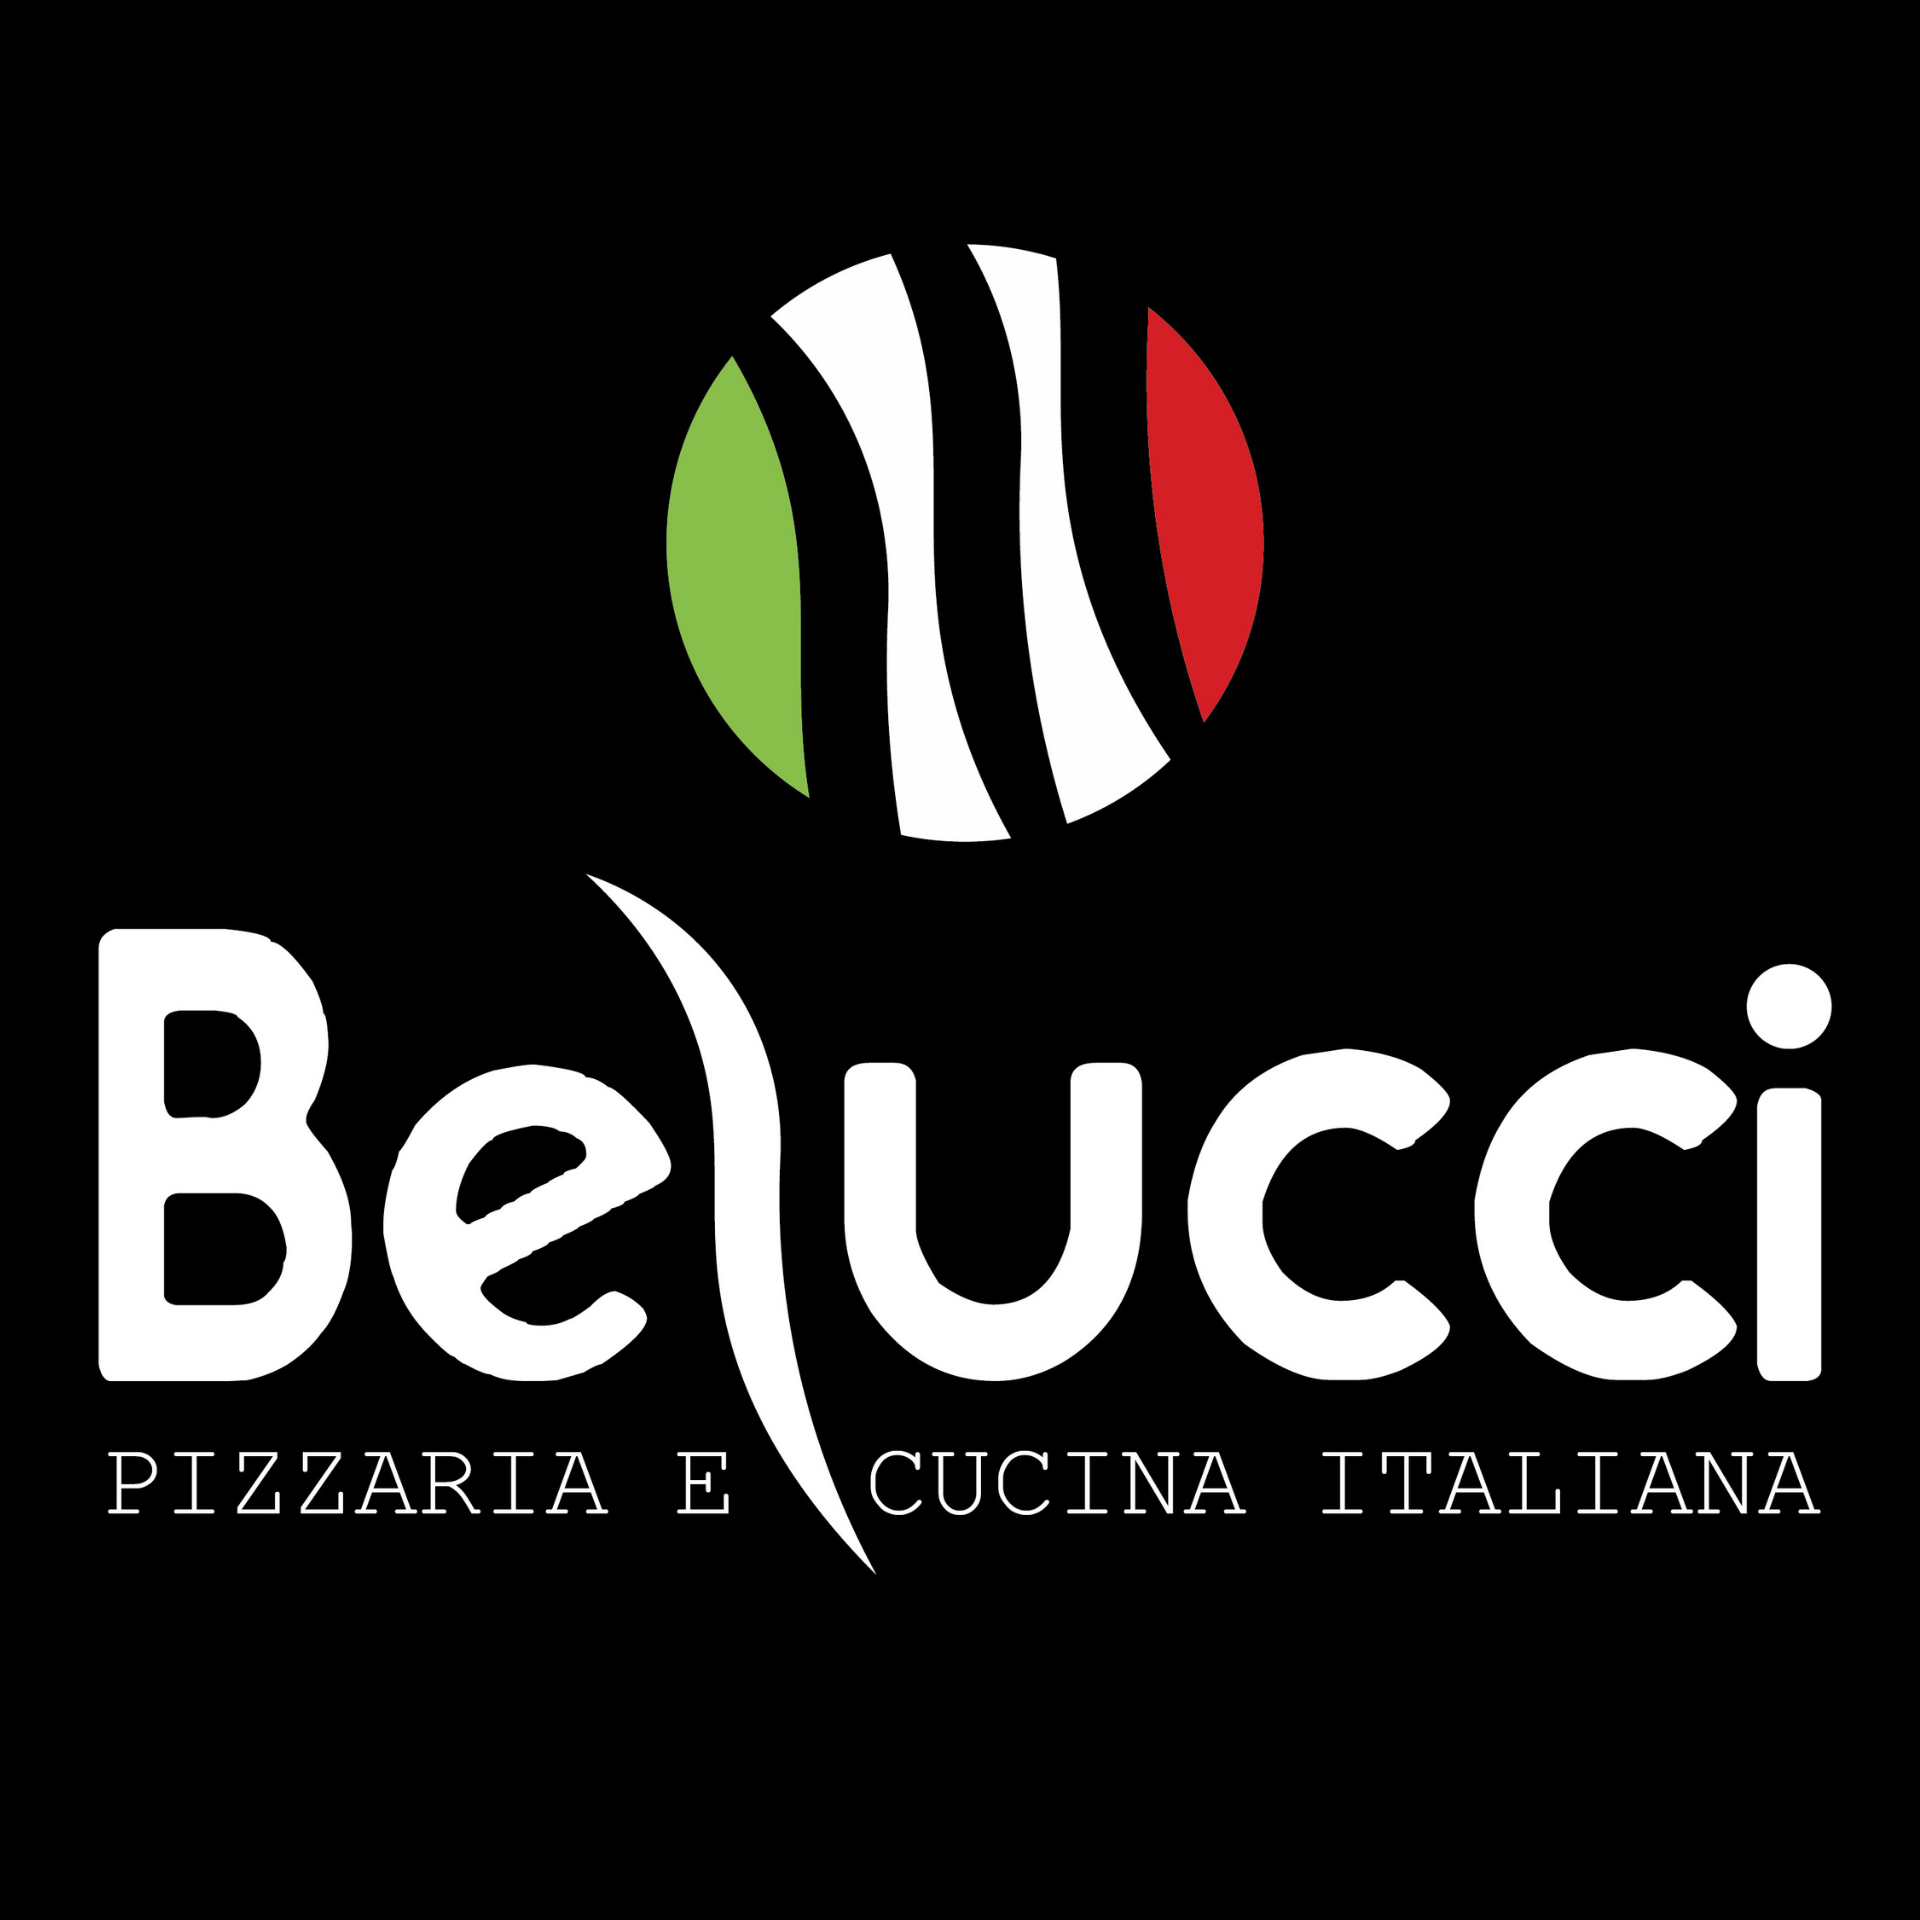 Pizzaria Belucci